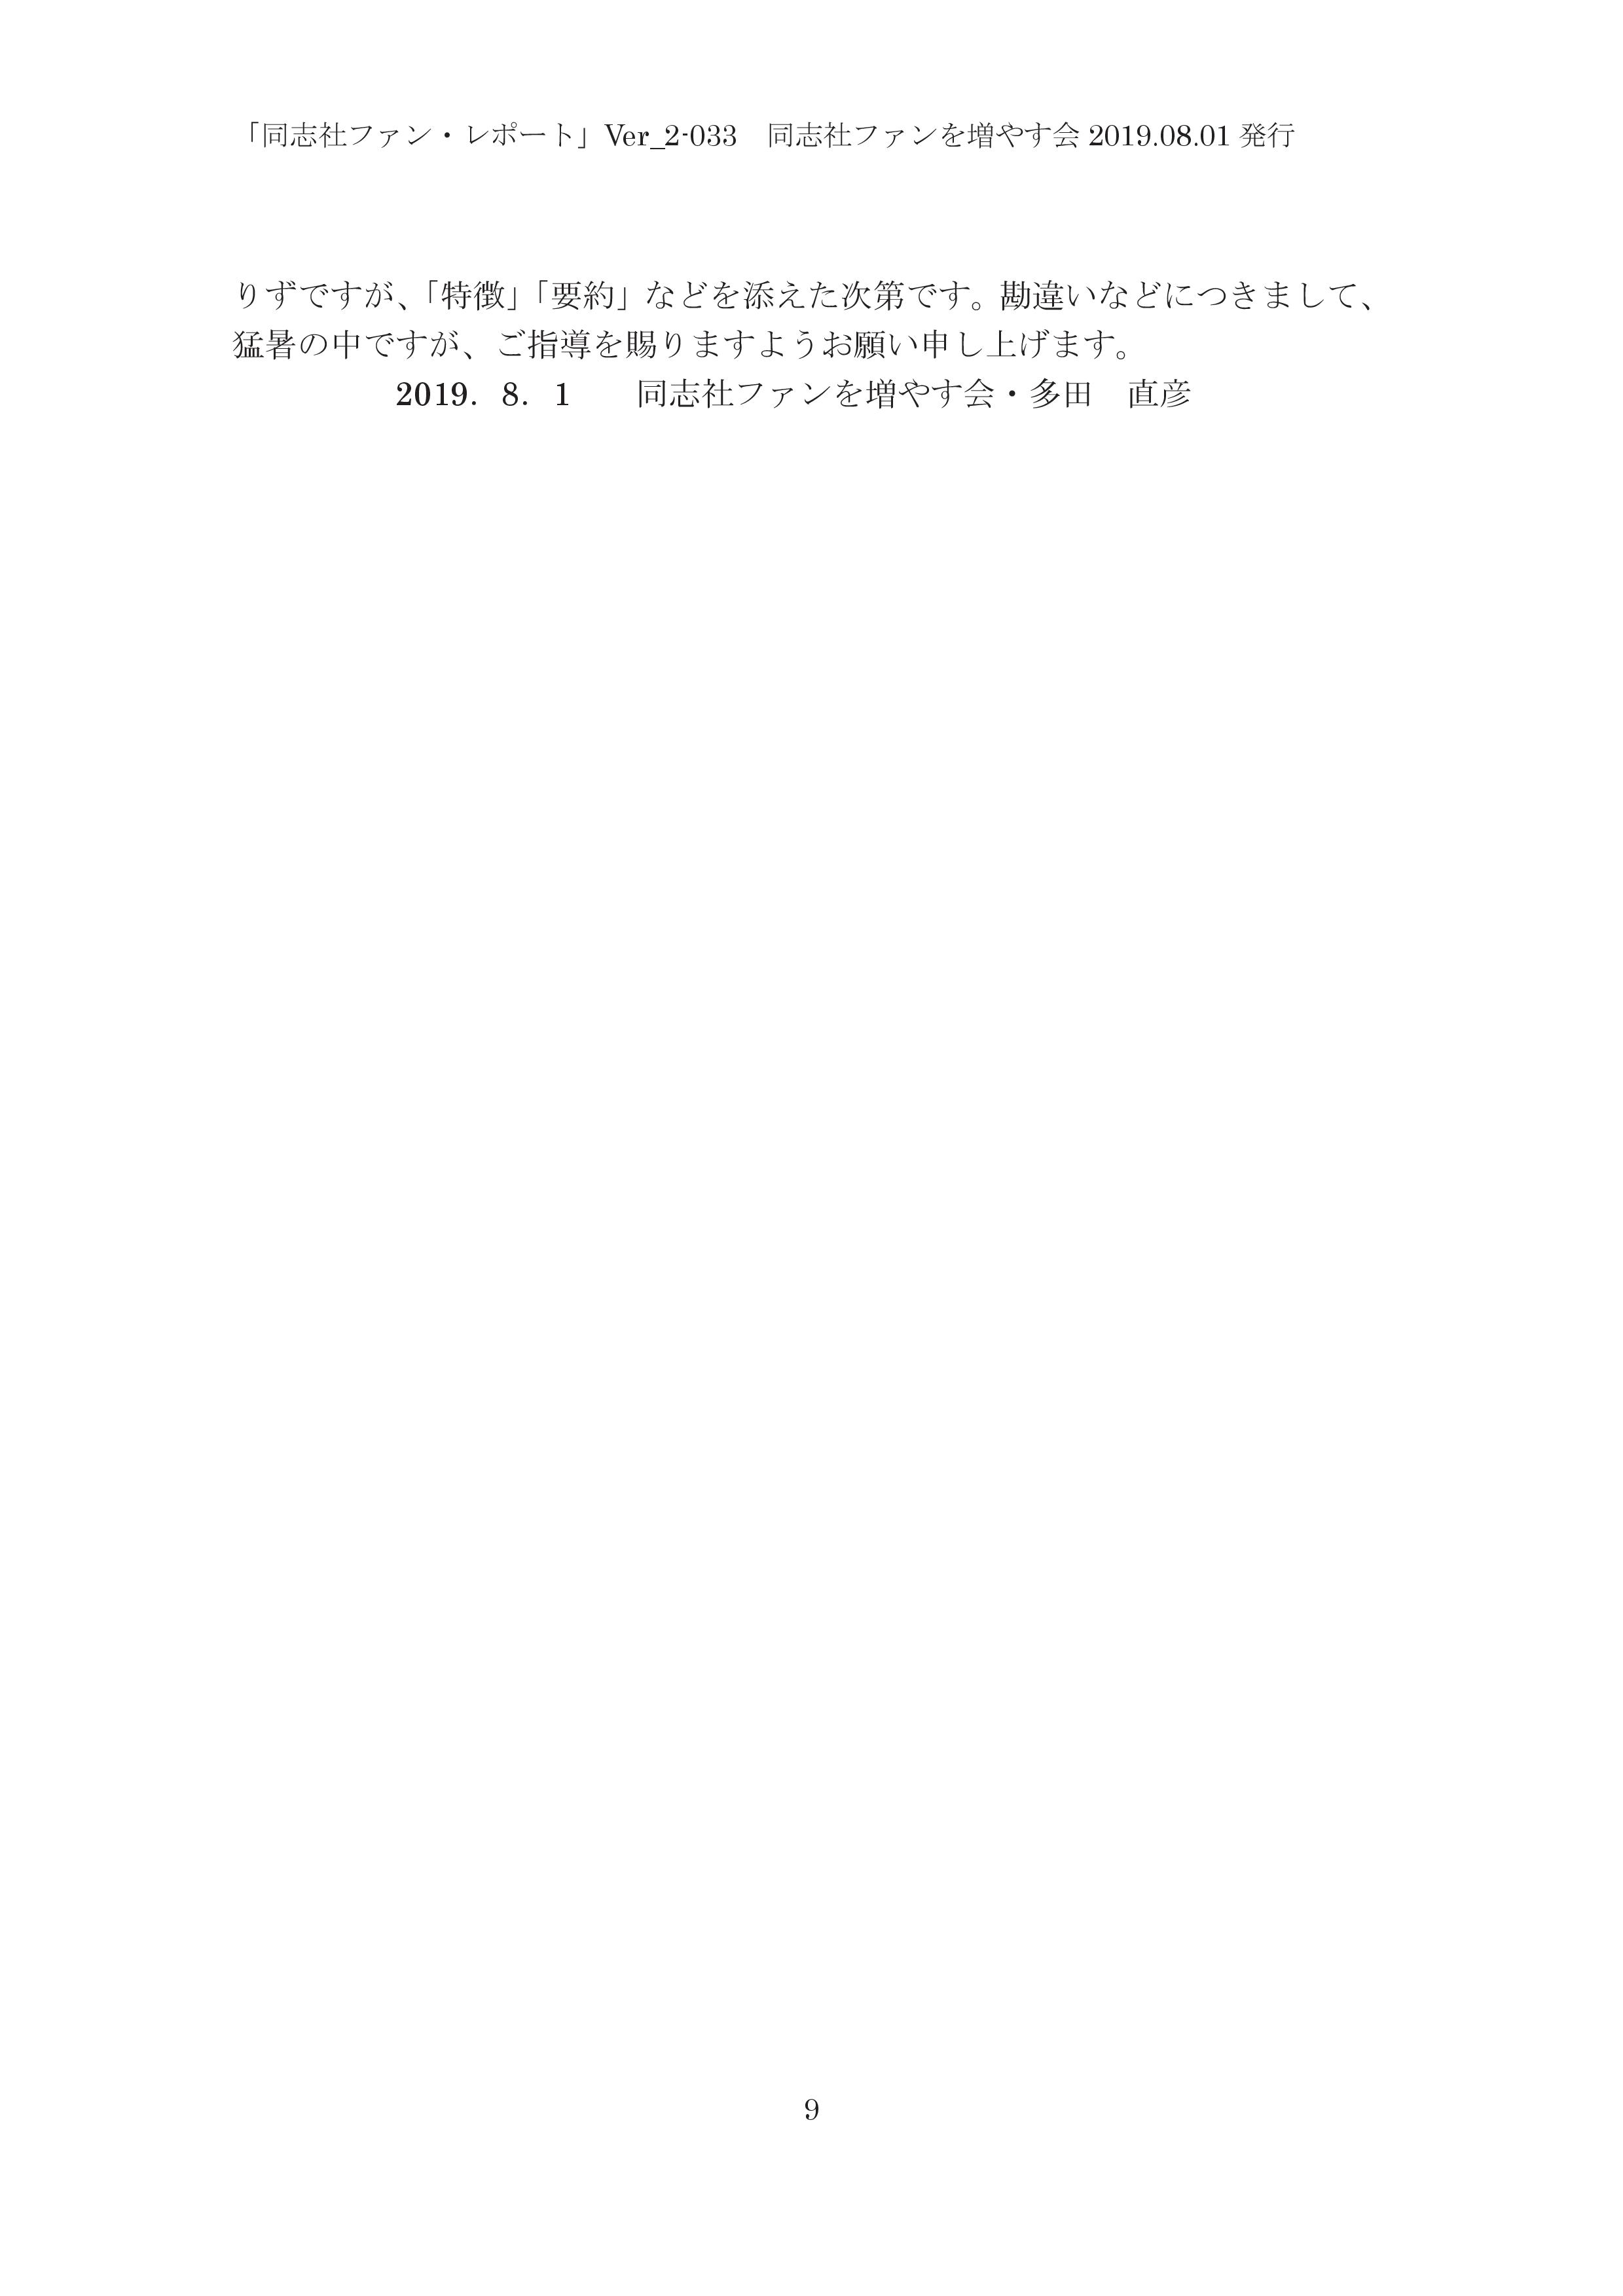 Ver_2-033（通巻264号）「同志社大学 by AERA」のお勧め-009.jpg